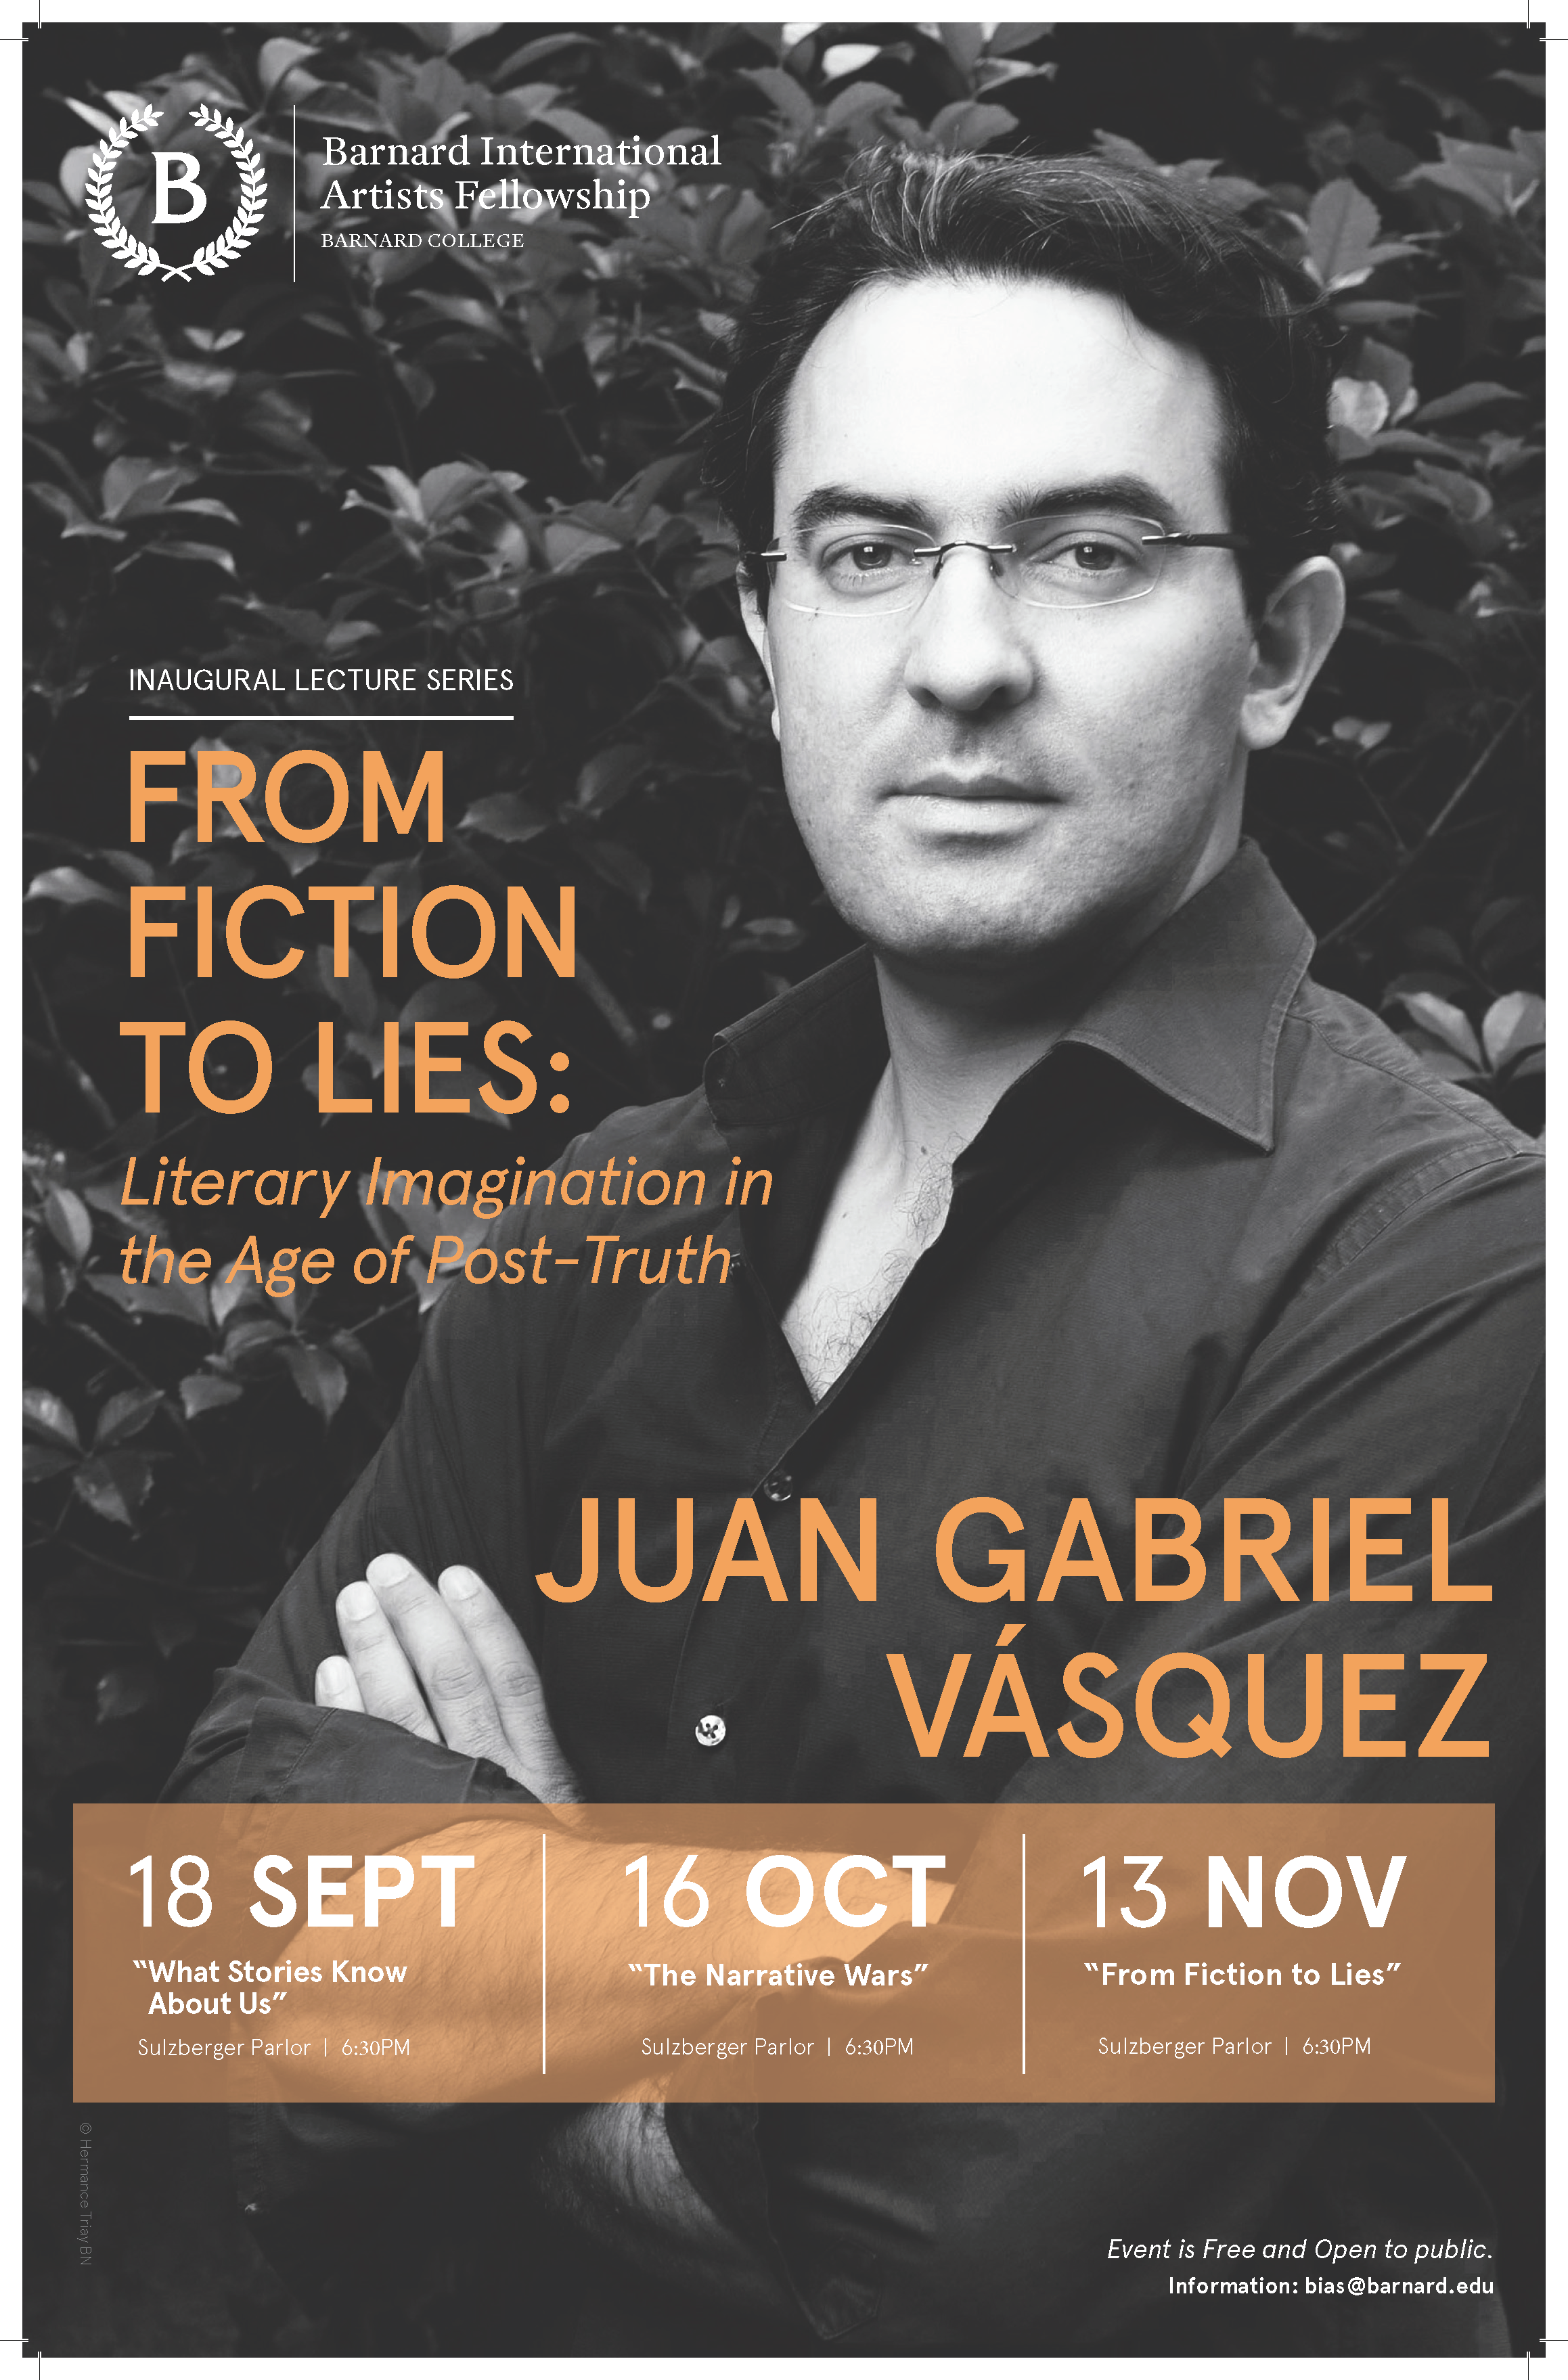 Juan Gabriel Vasquez event poster with three dates